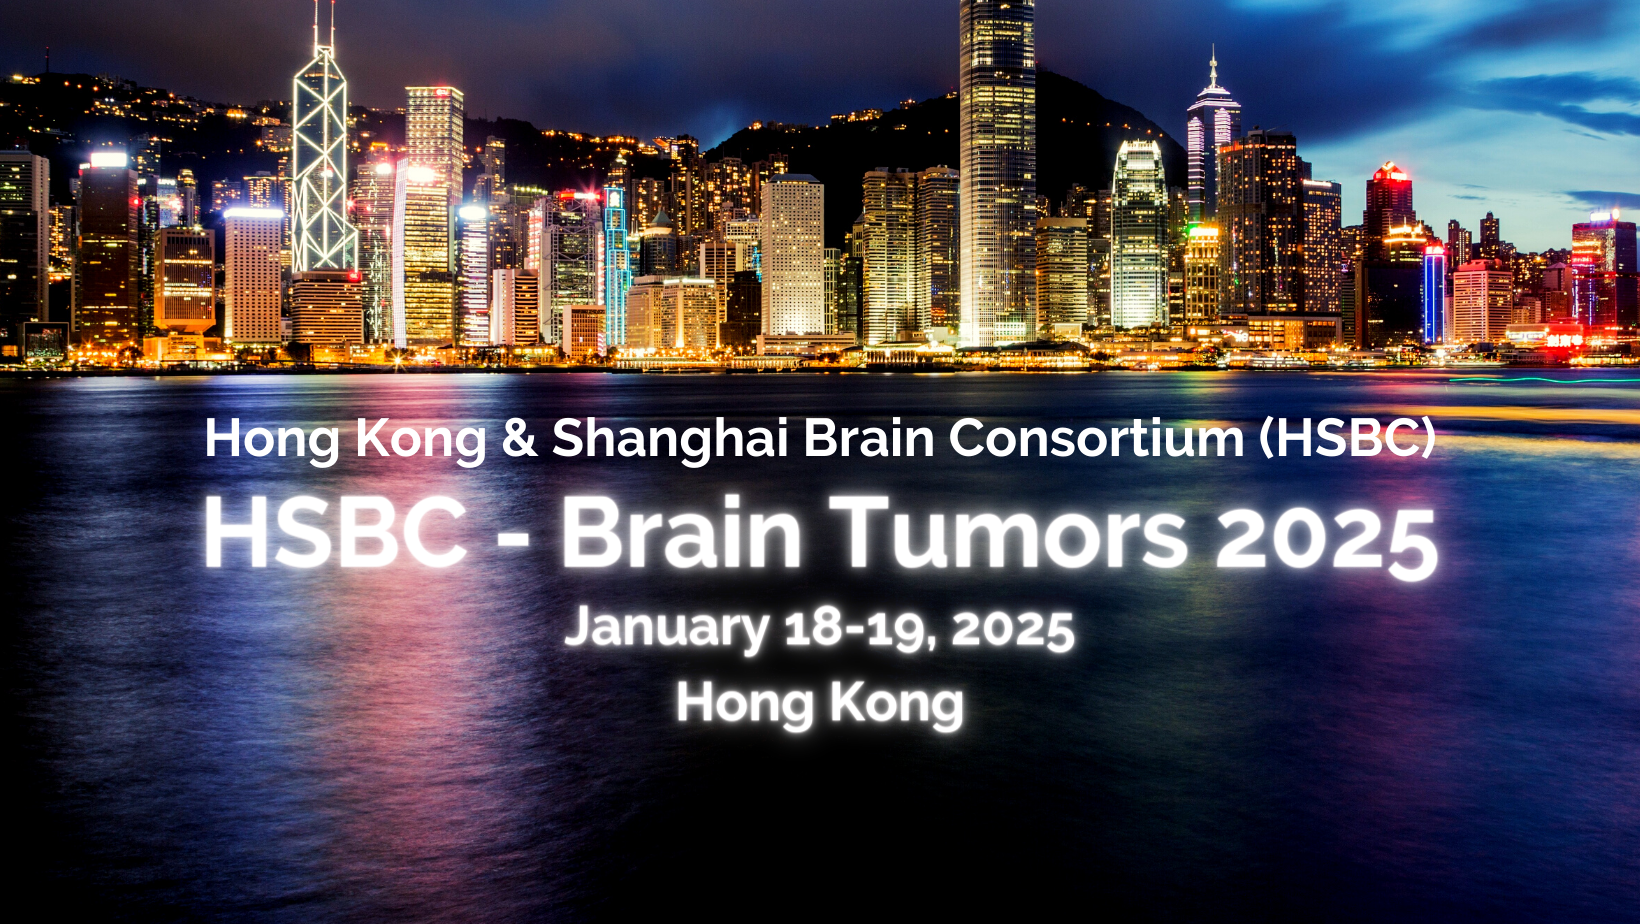 HSBC Brain Tumors 2025